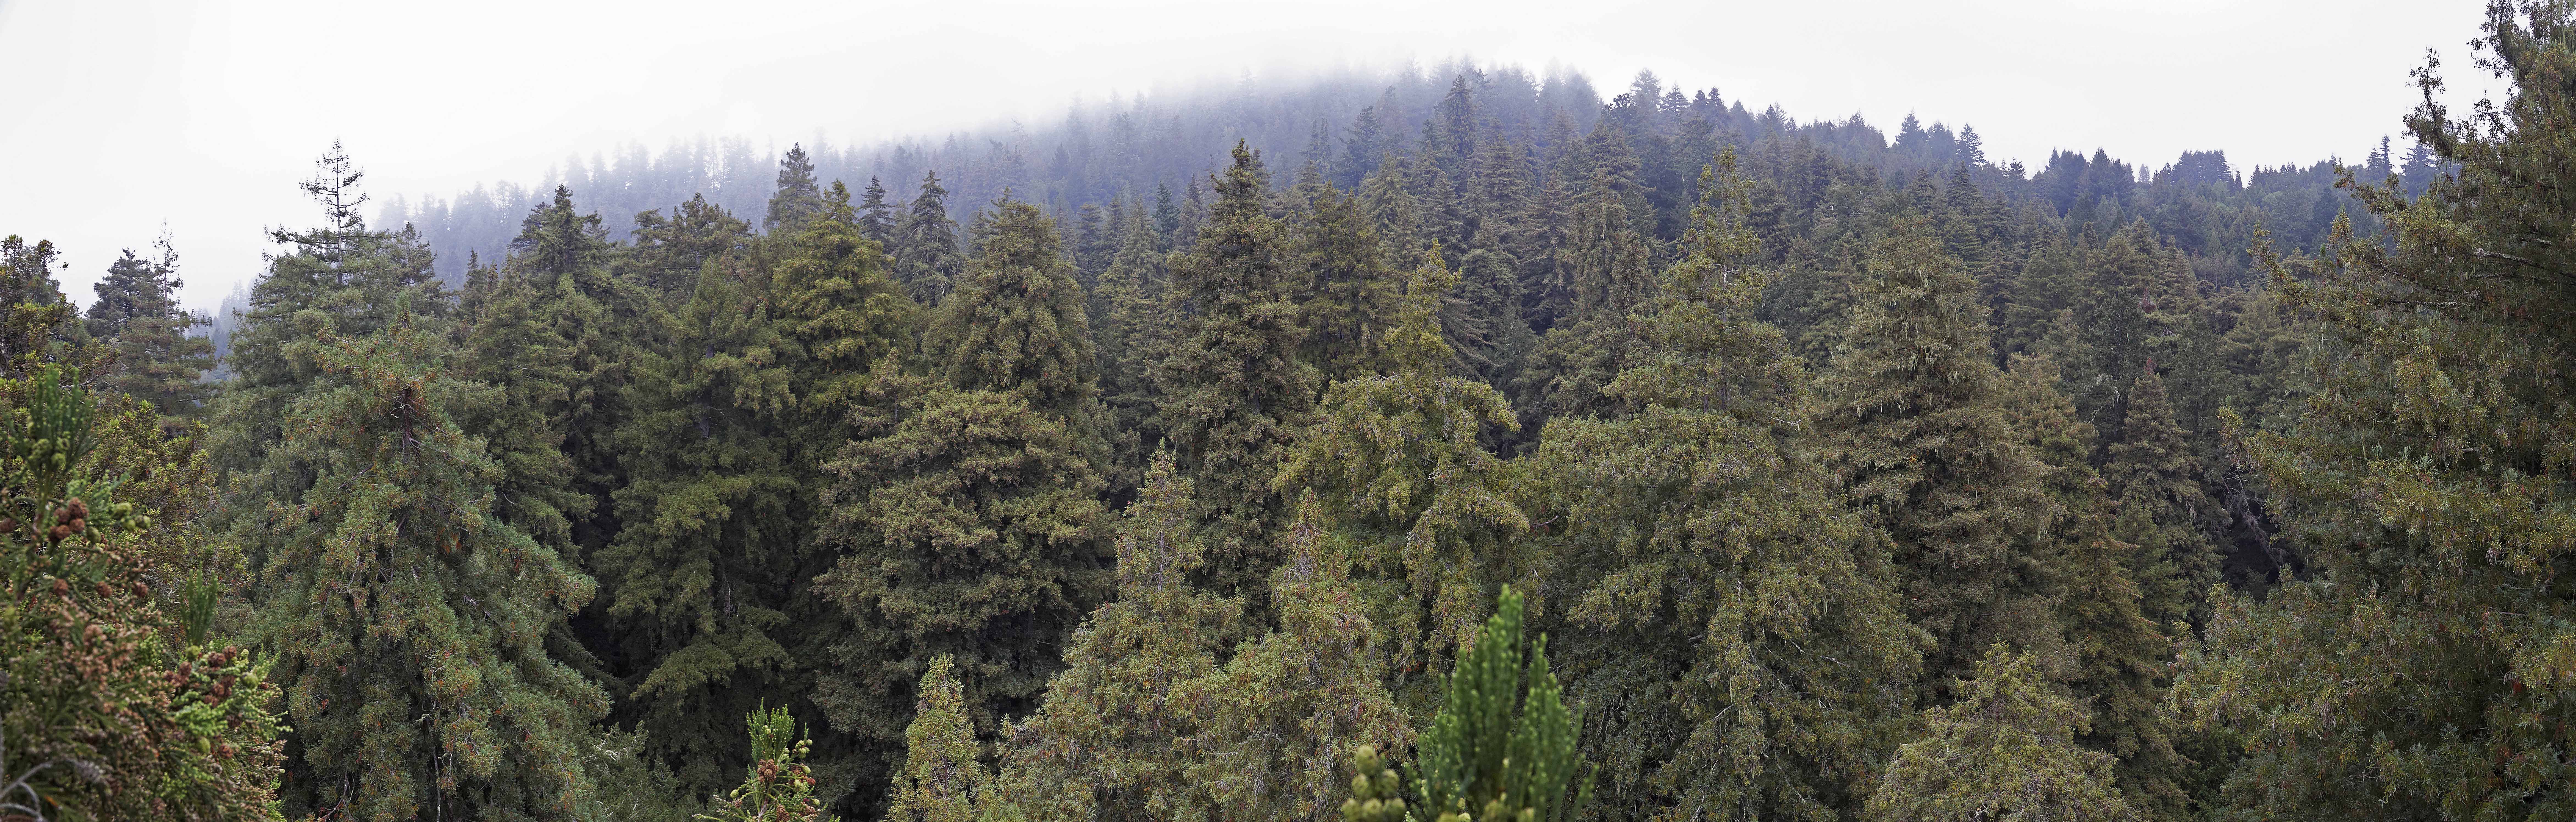 Coast Redwood Forest, California